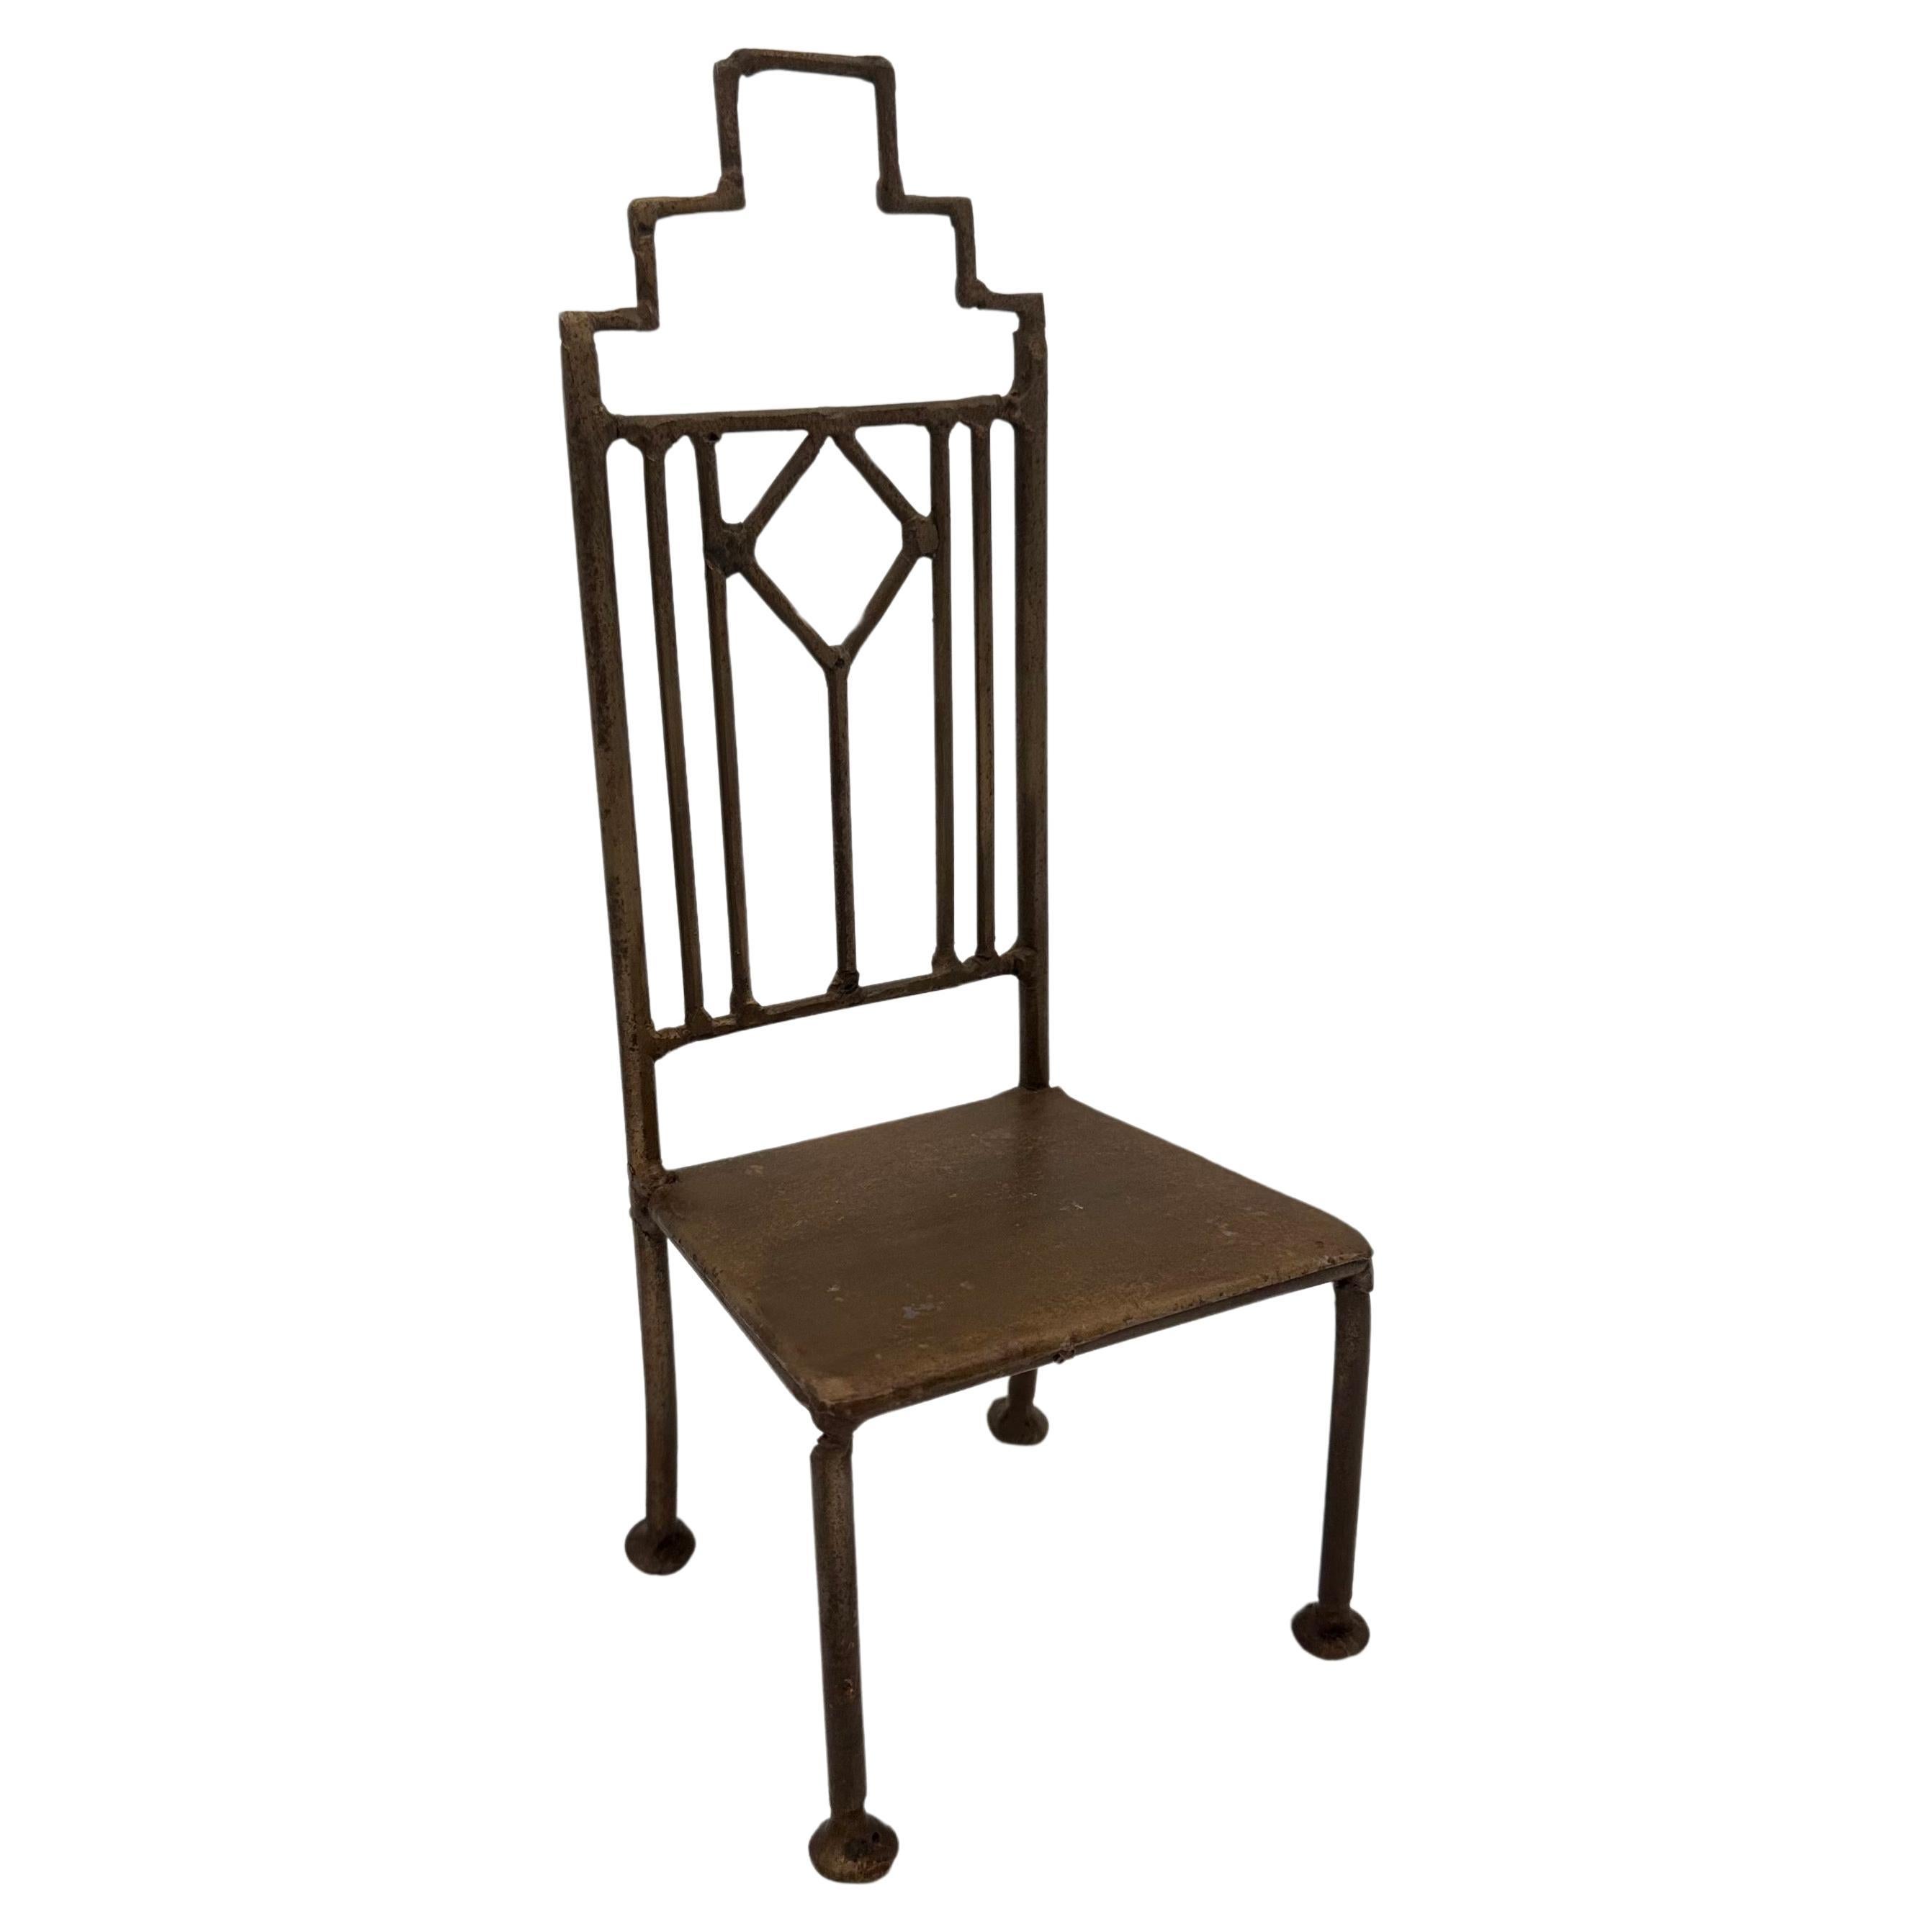 Vintage Handmade Miniature Metal Chair in the Art Deco Style